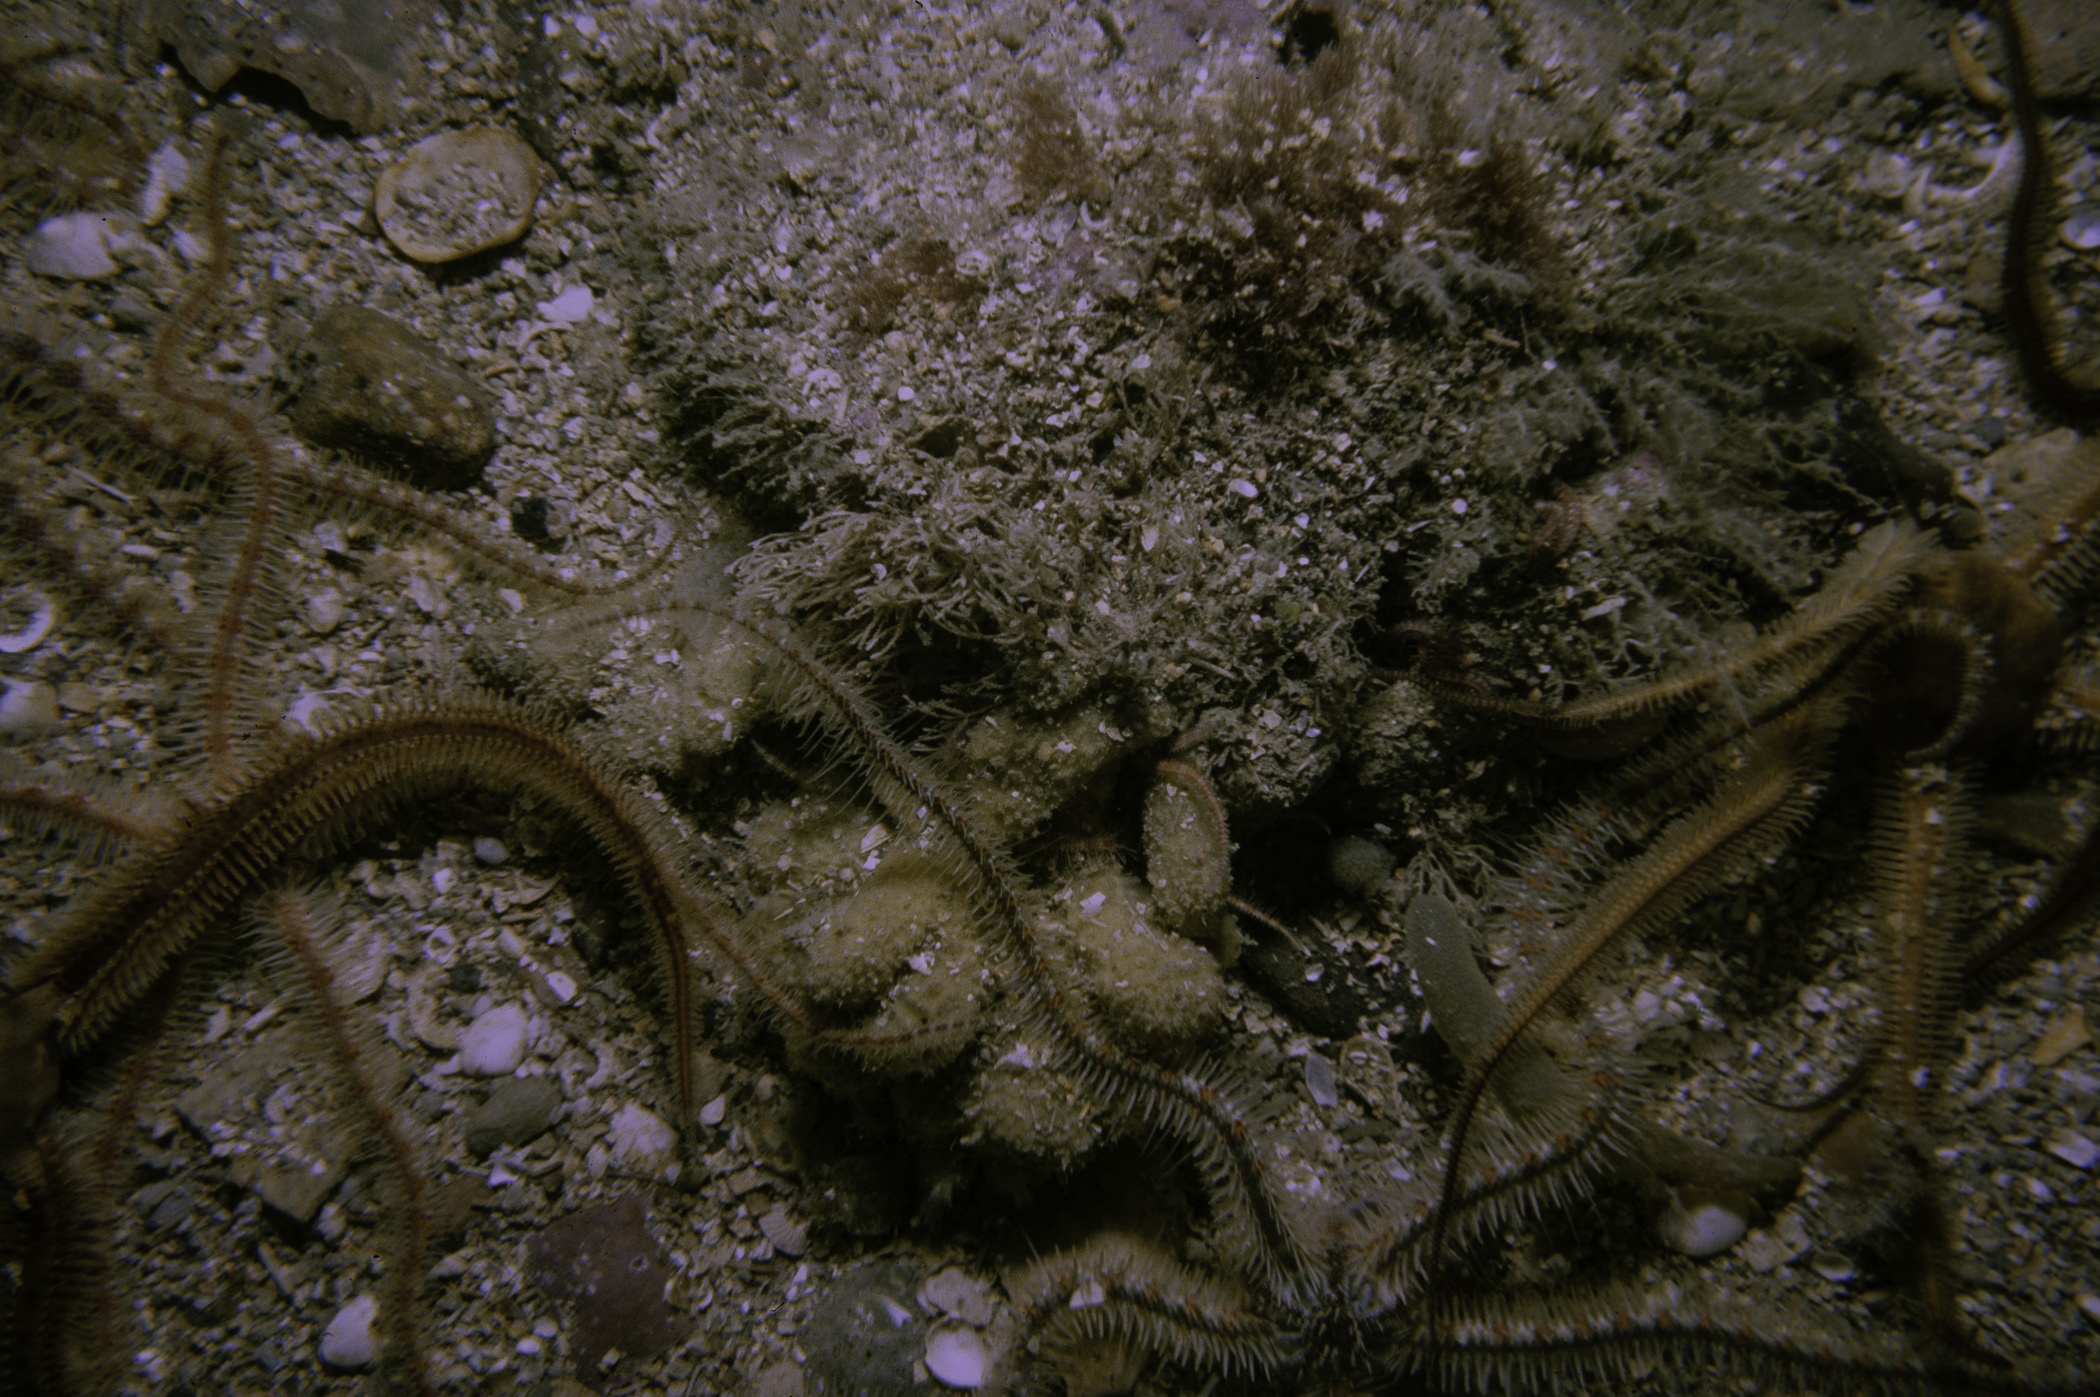 Ophiothrix fragilis, Ophiocomina nigra. Site: Neil's Reef, Strangford Lough. 